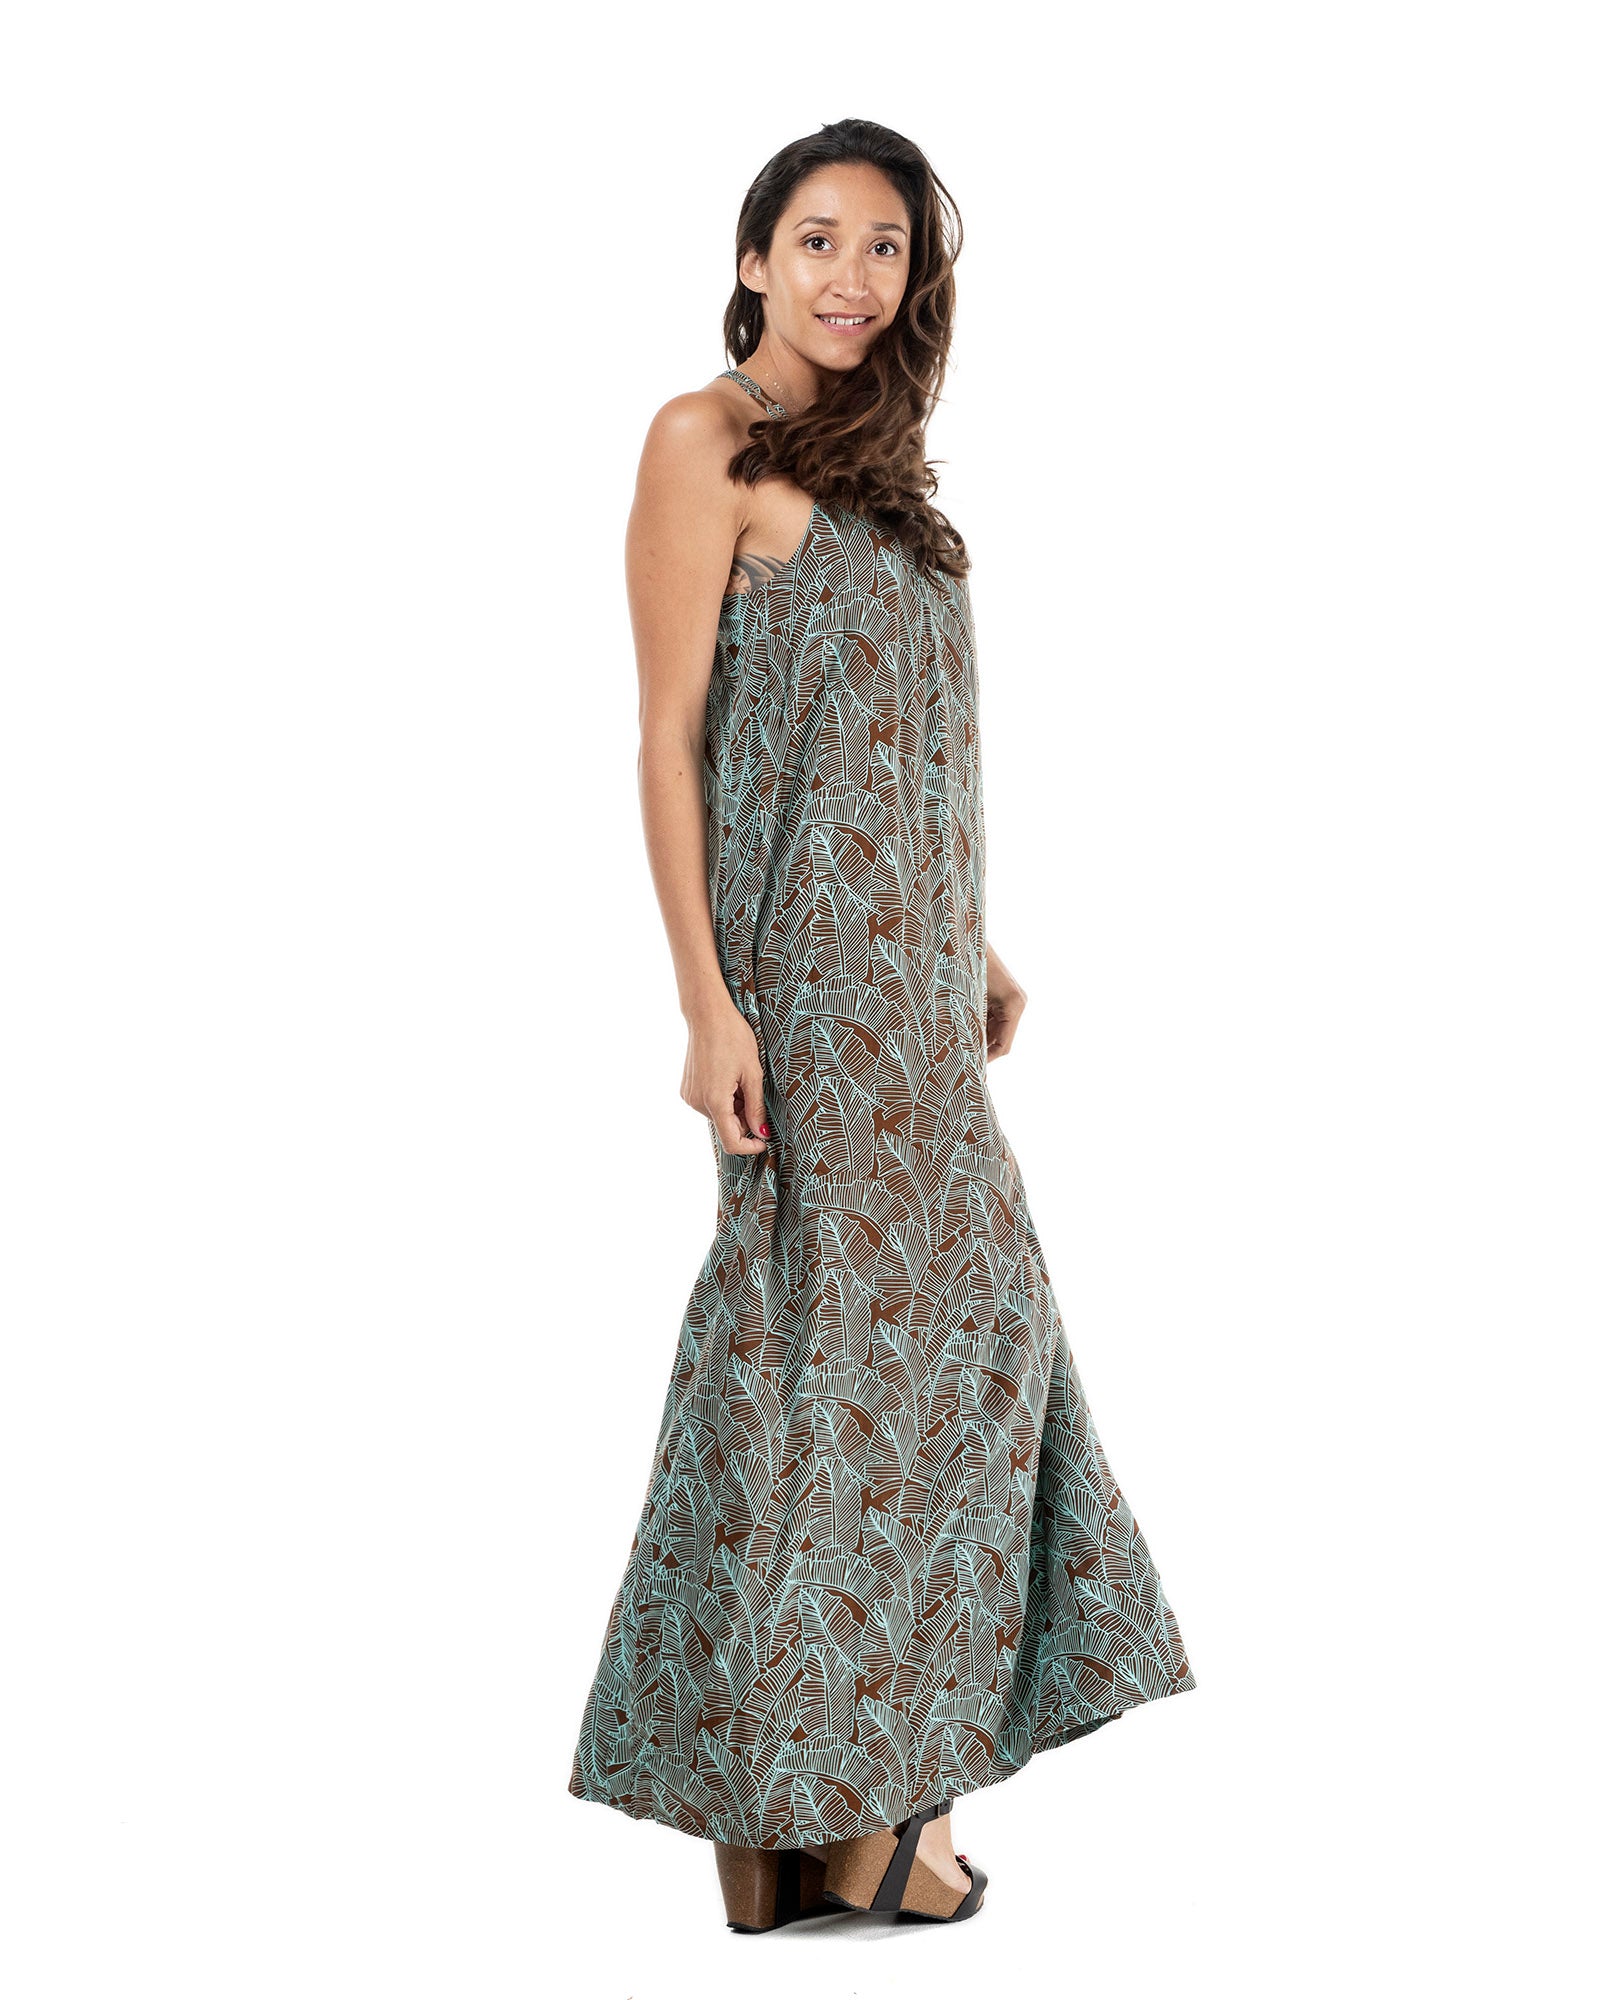 The Kadek Printed Dress Long